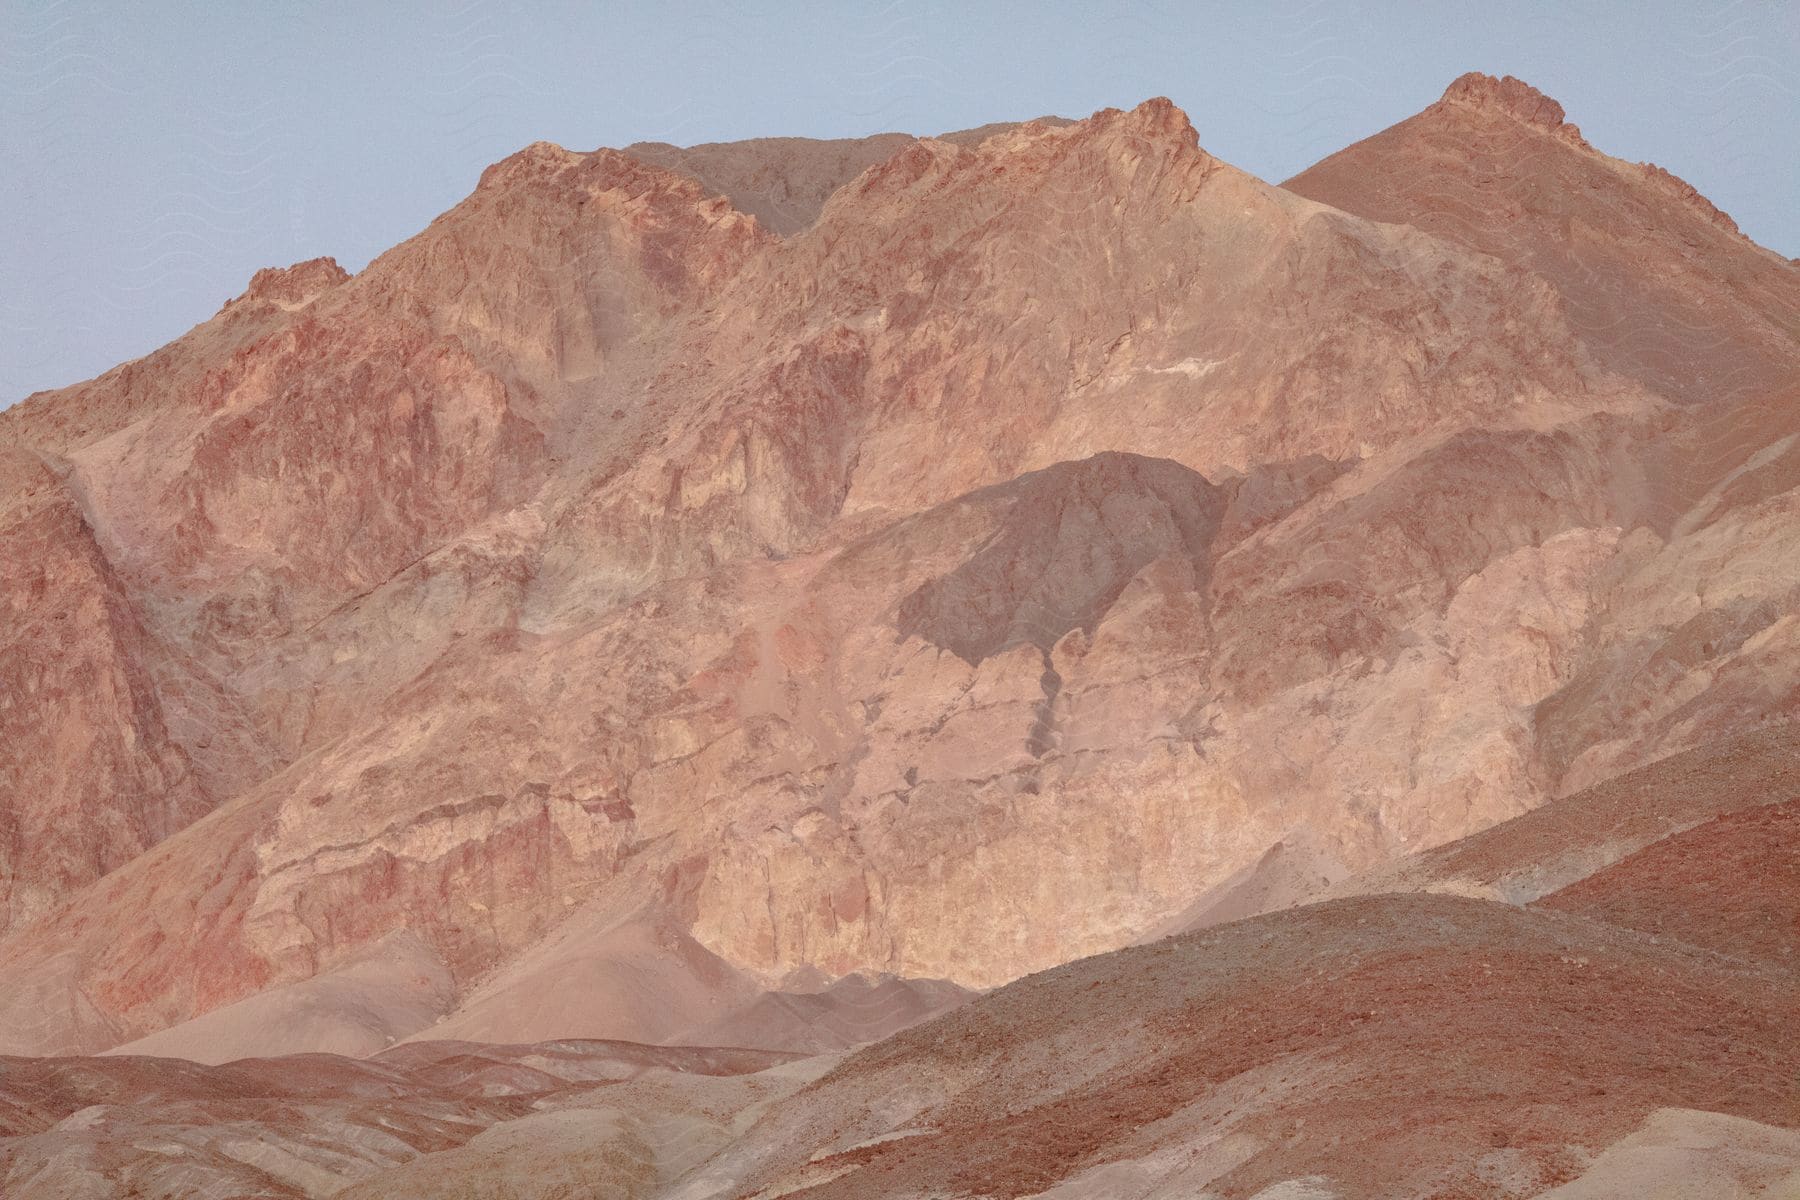 Brown rugged mountain range in an outdoor desert landscape